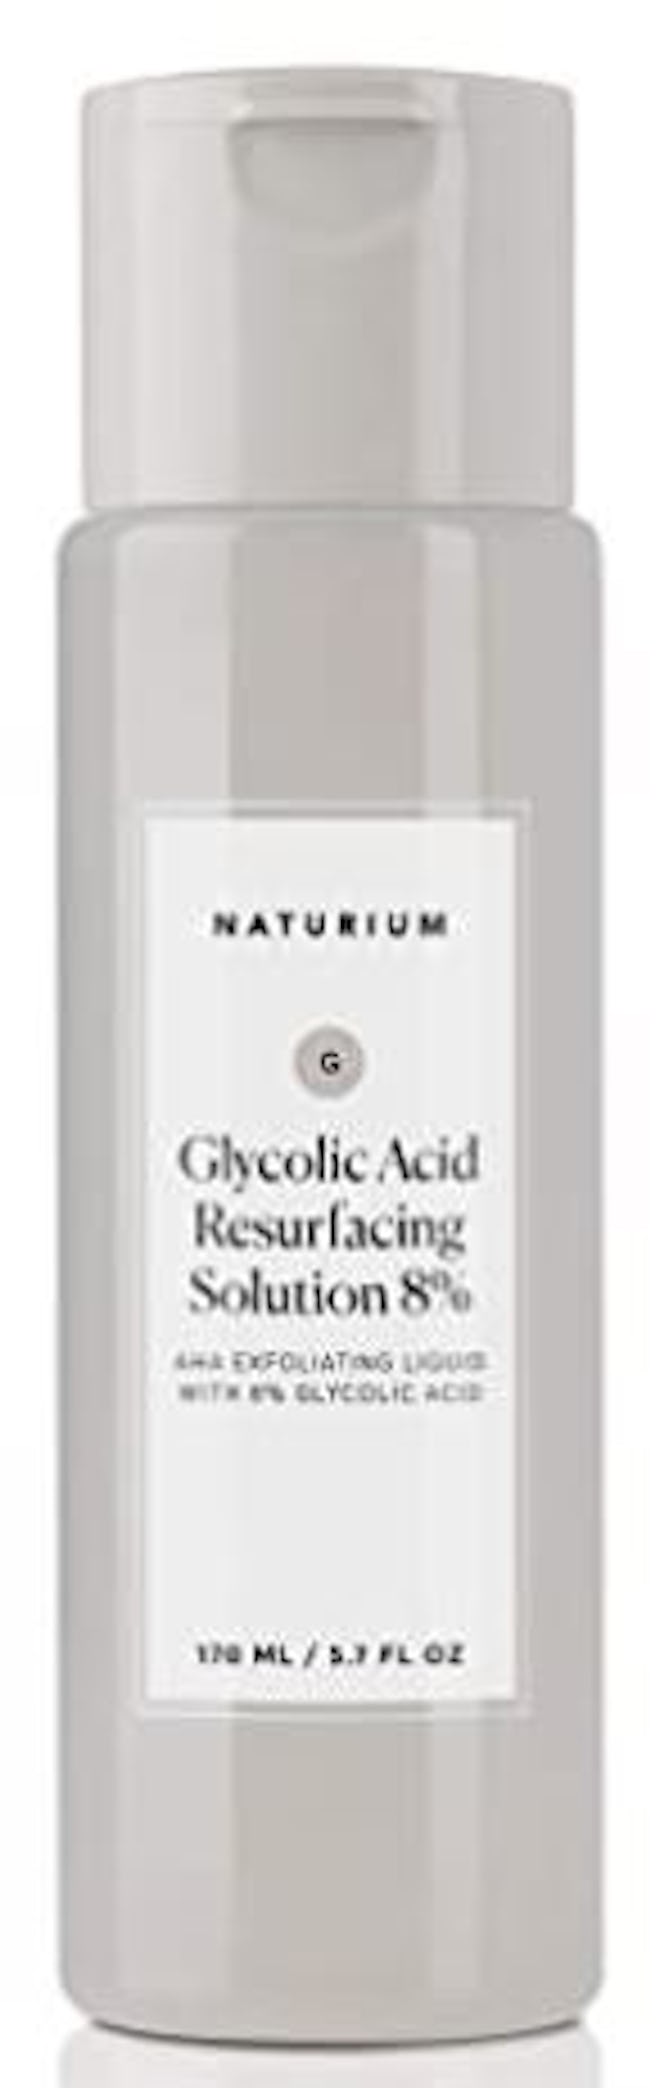 Naturium Glycolic Acid Resurfacing Solution for soft skin